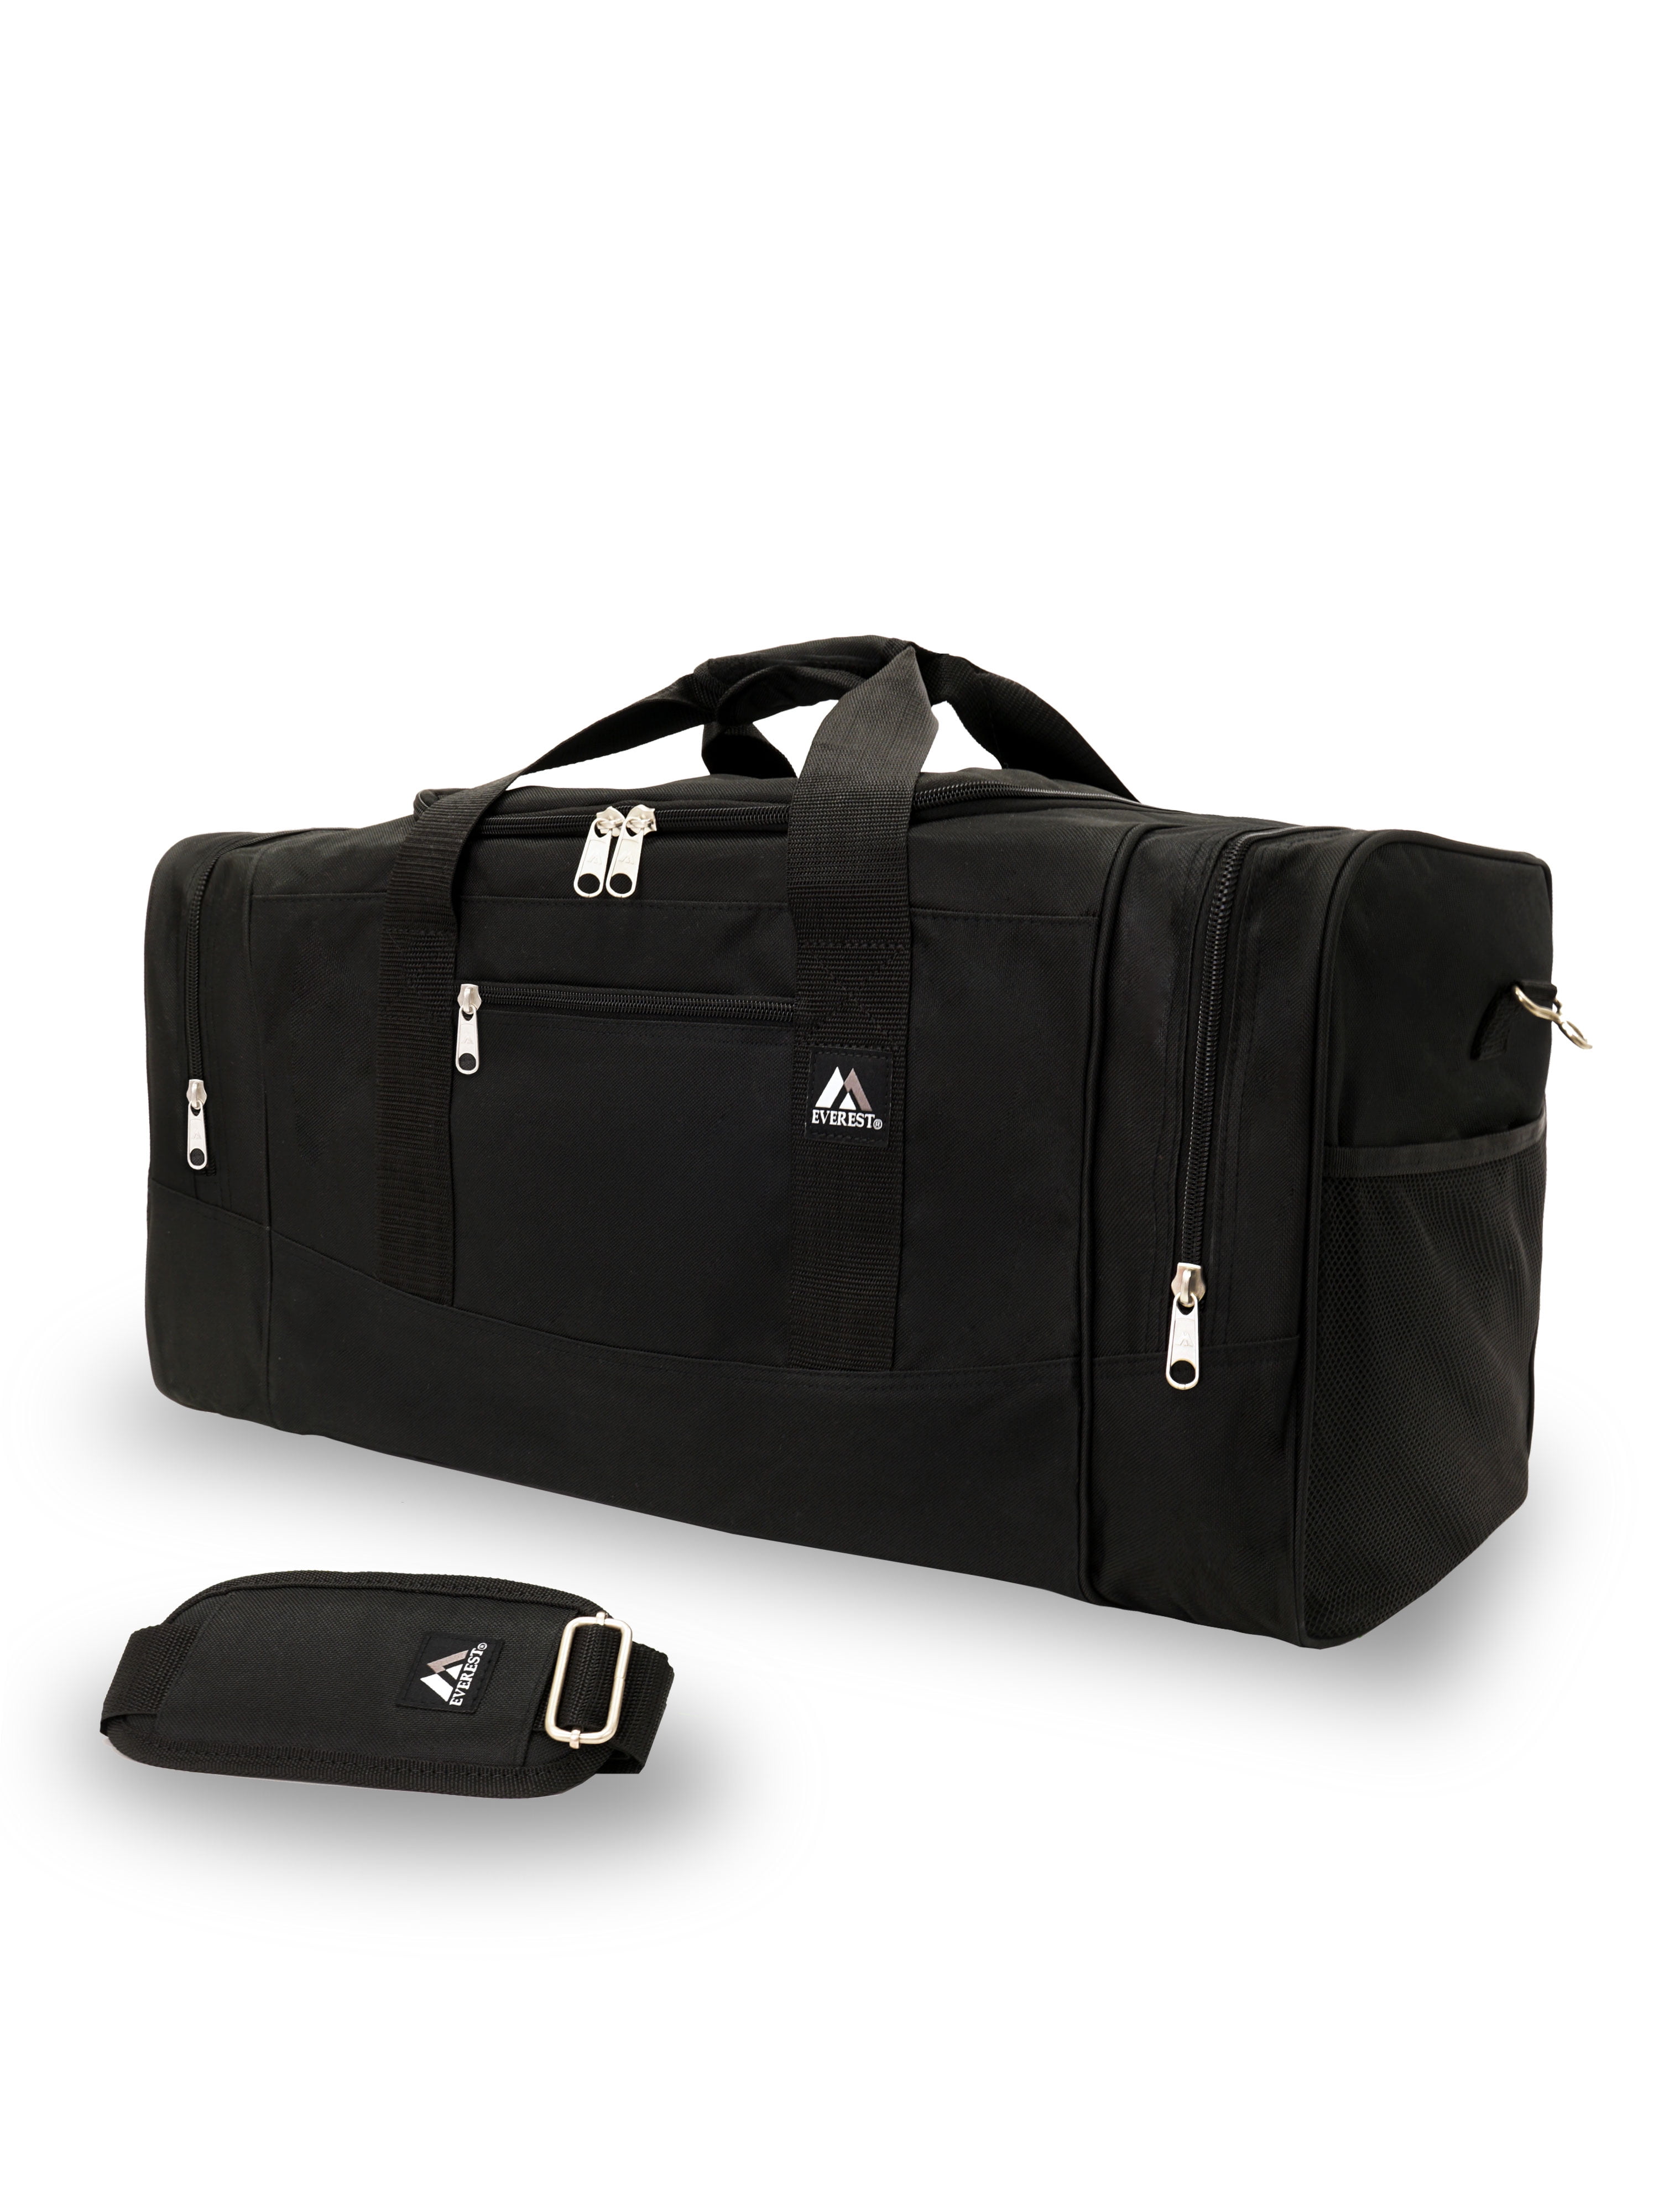 Jedi Order Logo Sport Heavyweight Canvas Duffel Bag in Olive & Black Large